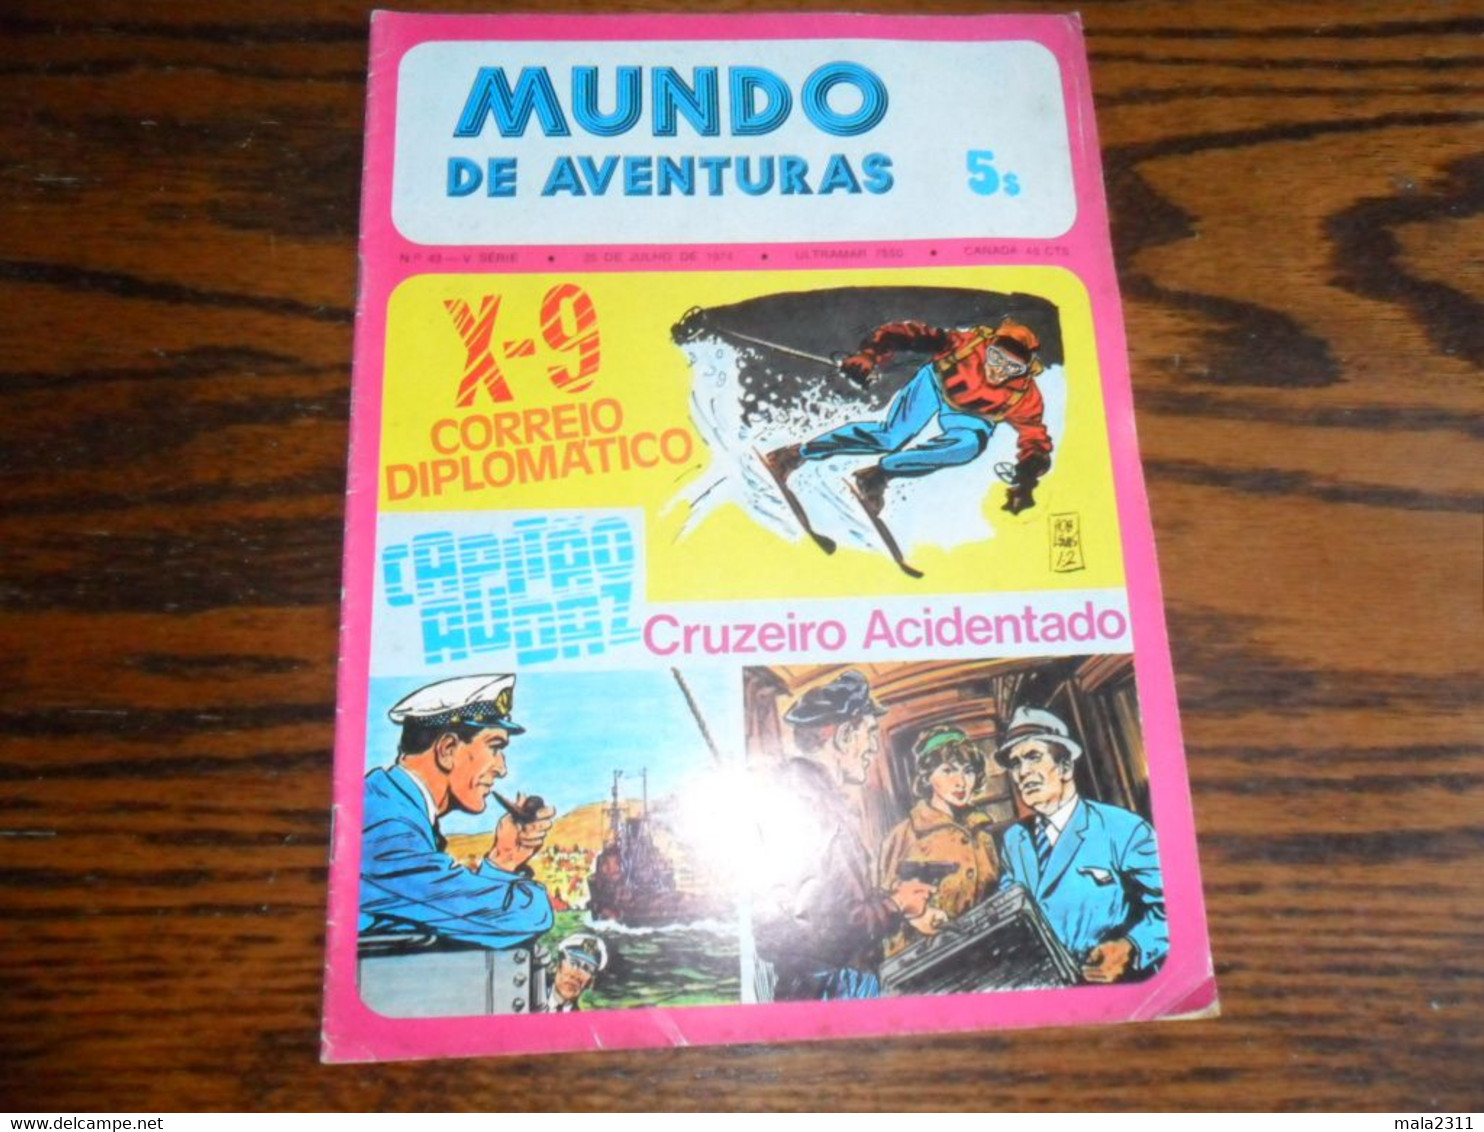 REVISTA BD / MUNDO DE AVENTURAS N° 43  /  JULHO 1974 - Comics & Manga (andere Sprachen)